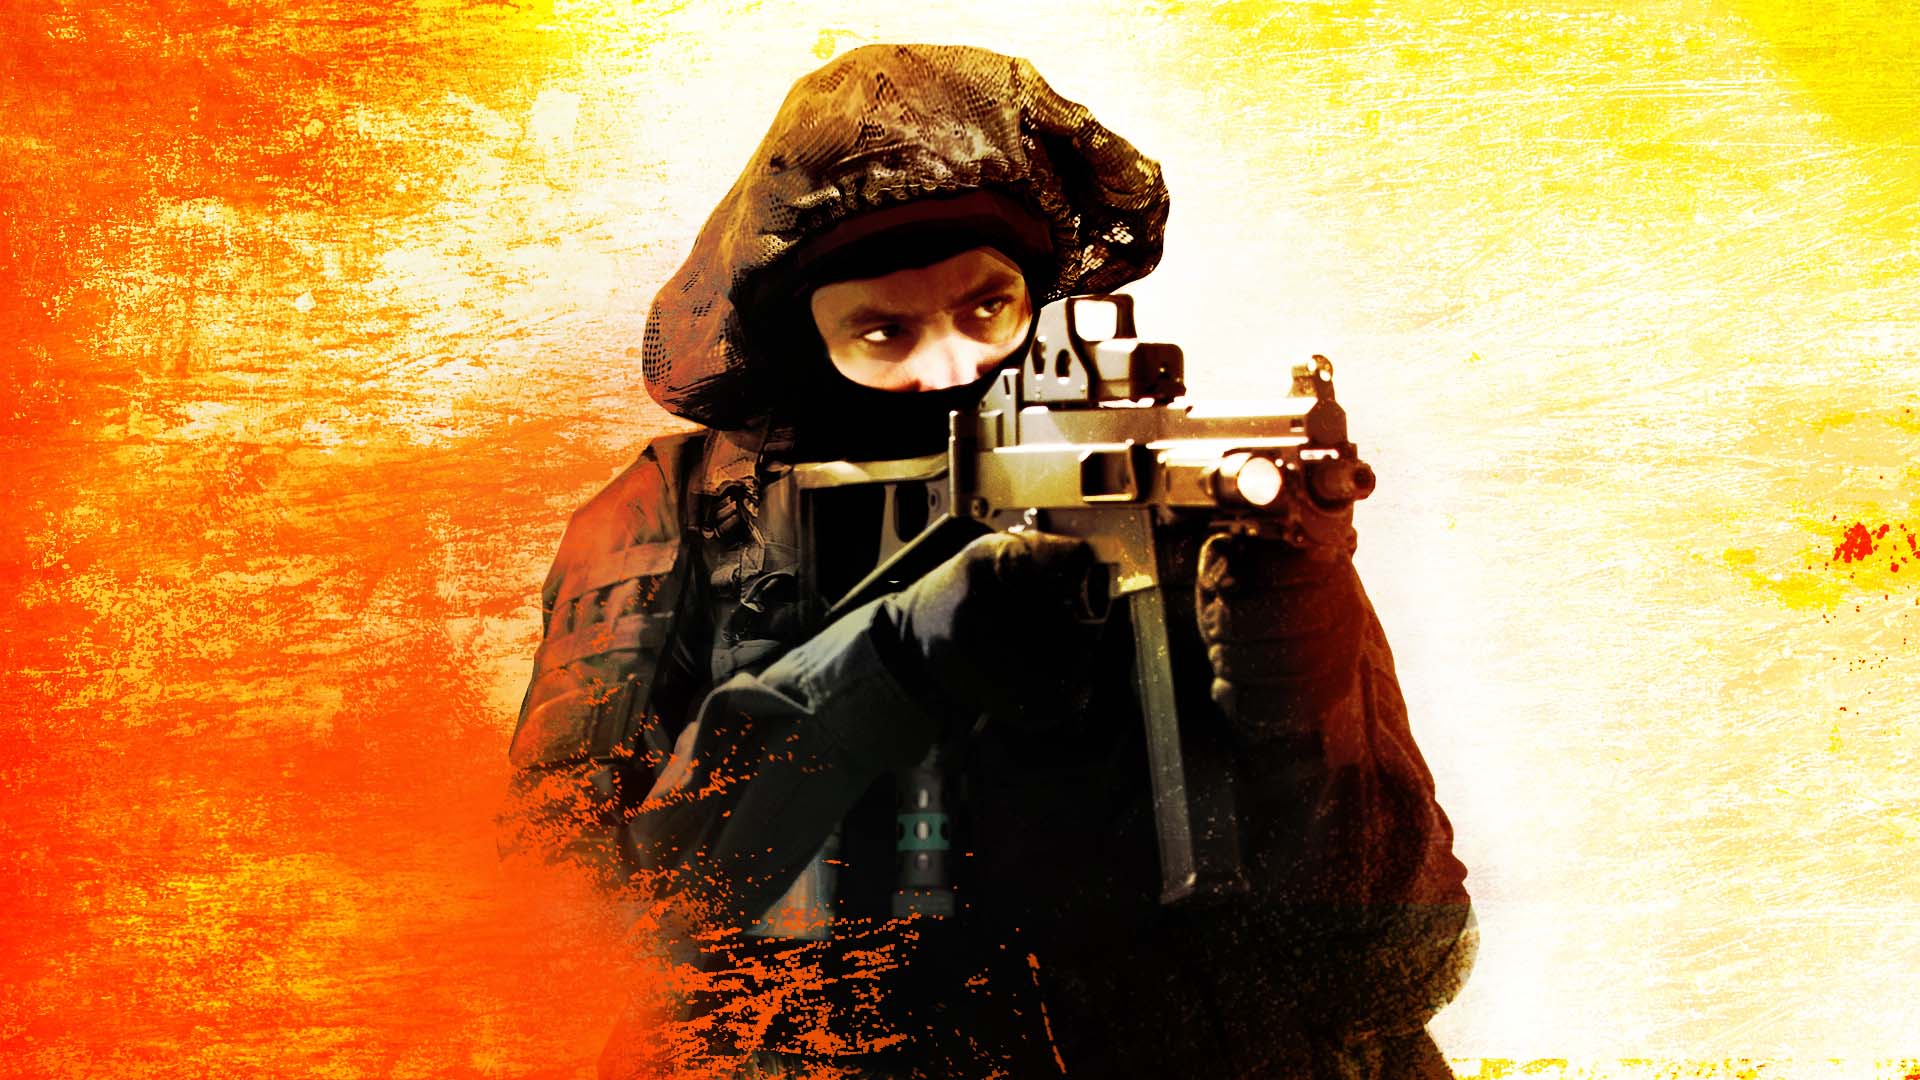 HD wallpaper: CS GO game wallpaper, Counter-Strike, Counter-Strike: Global  Offensive